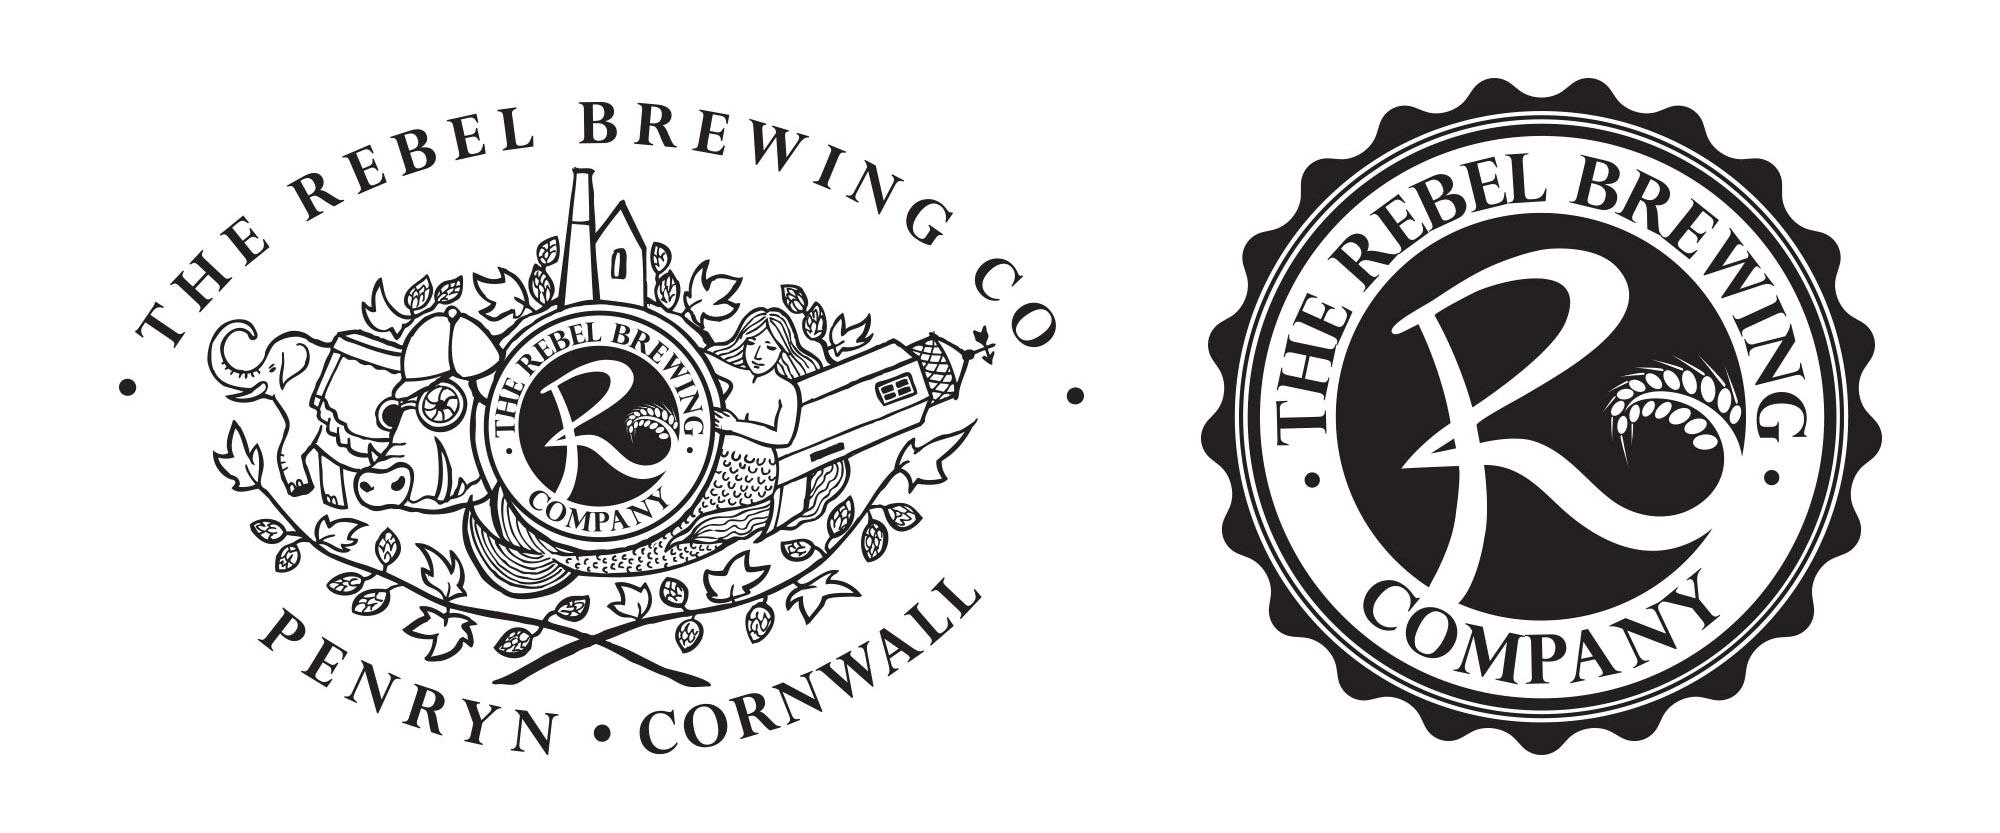 Craft Beer Logo - The Rebel Brewing Co | Craft beer labels, branding